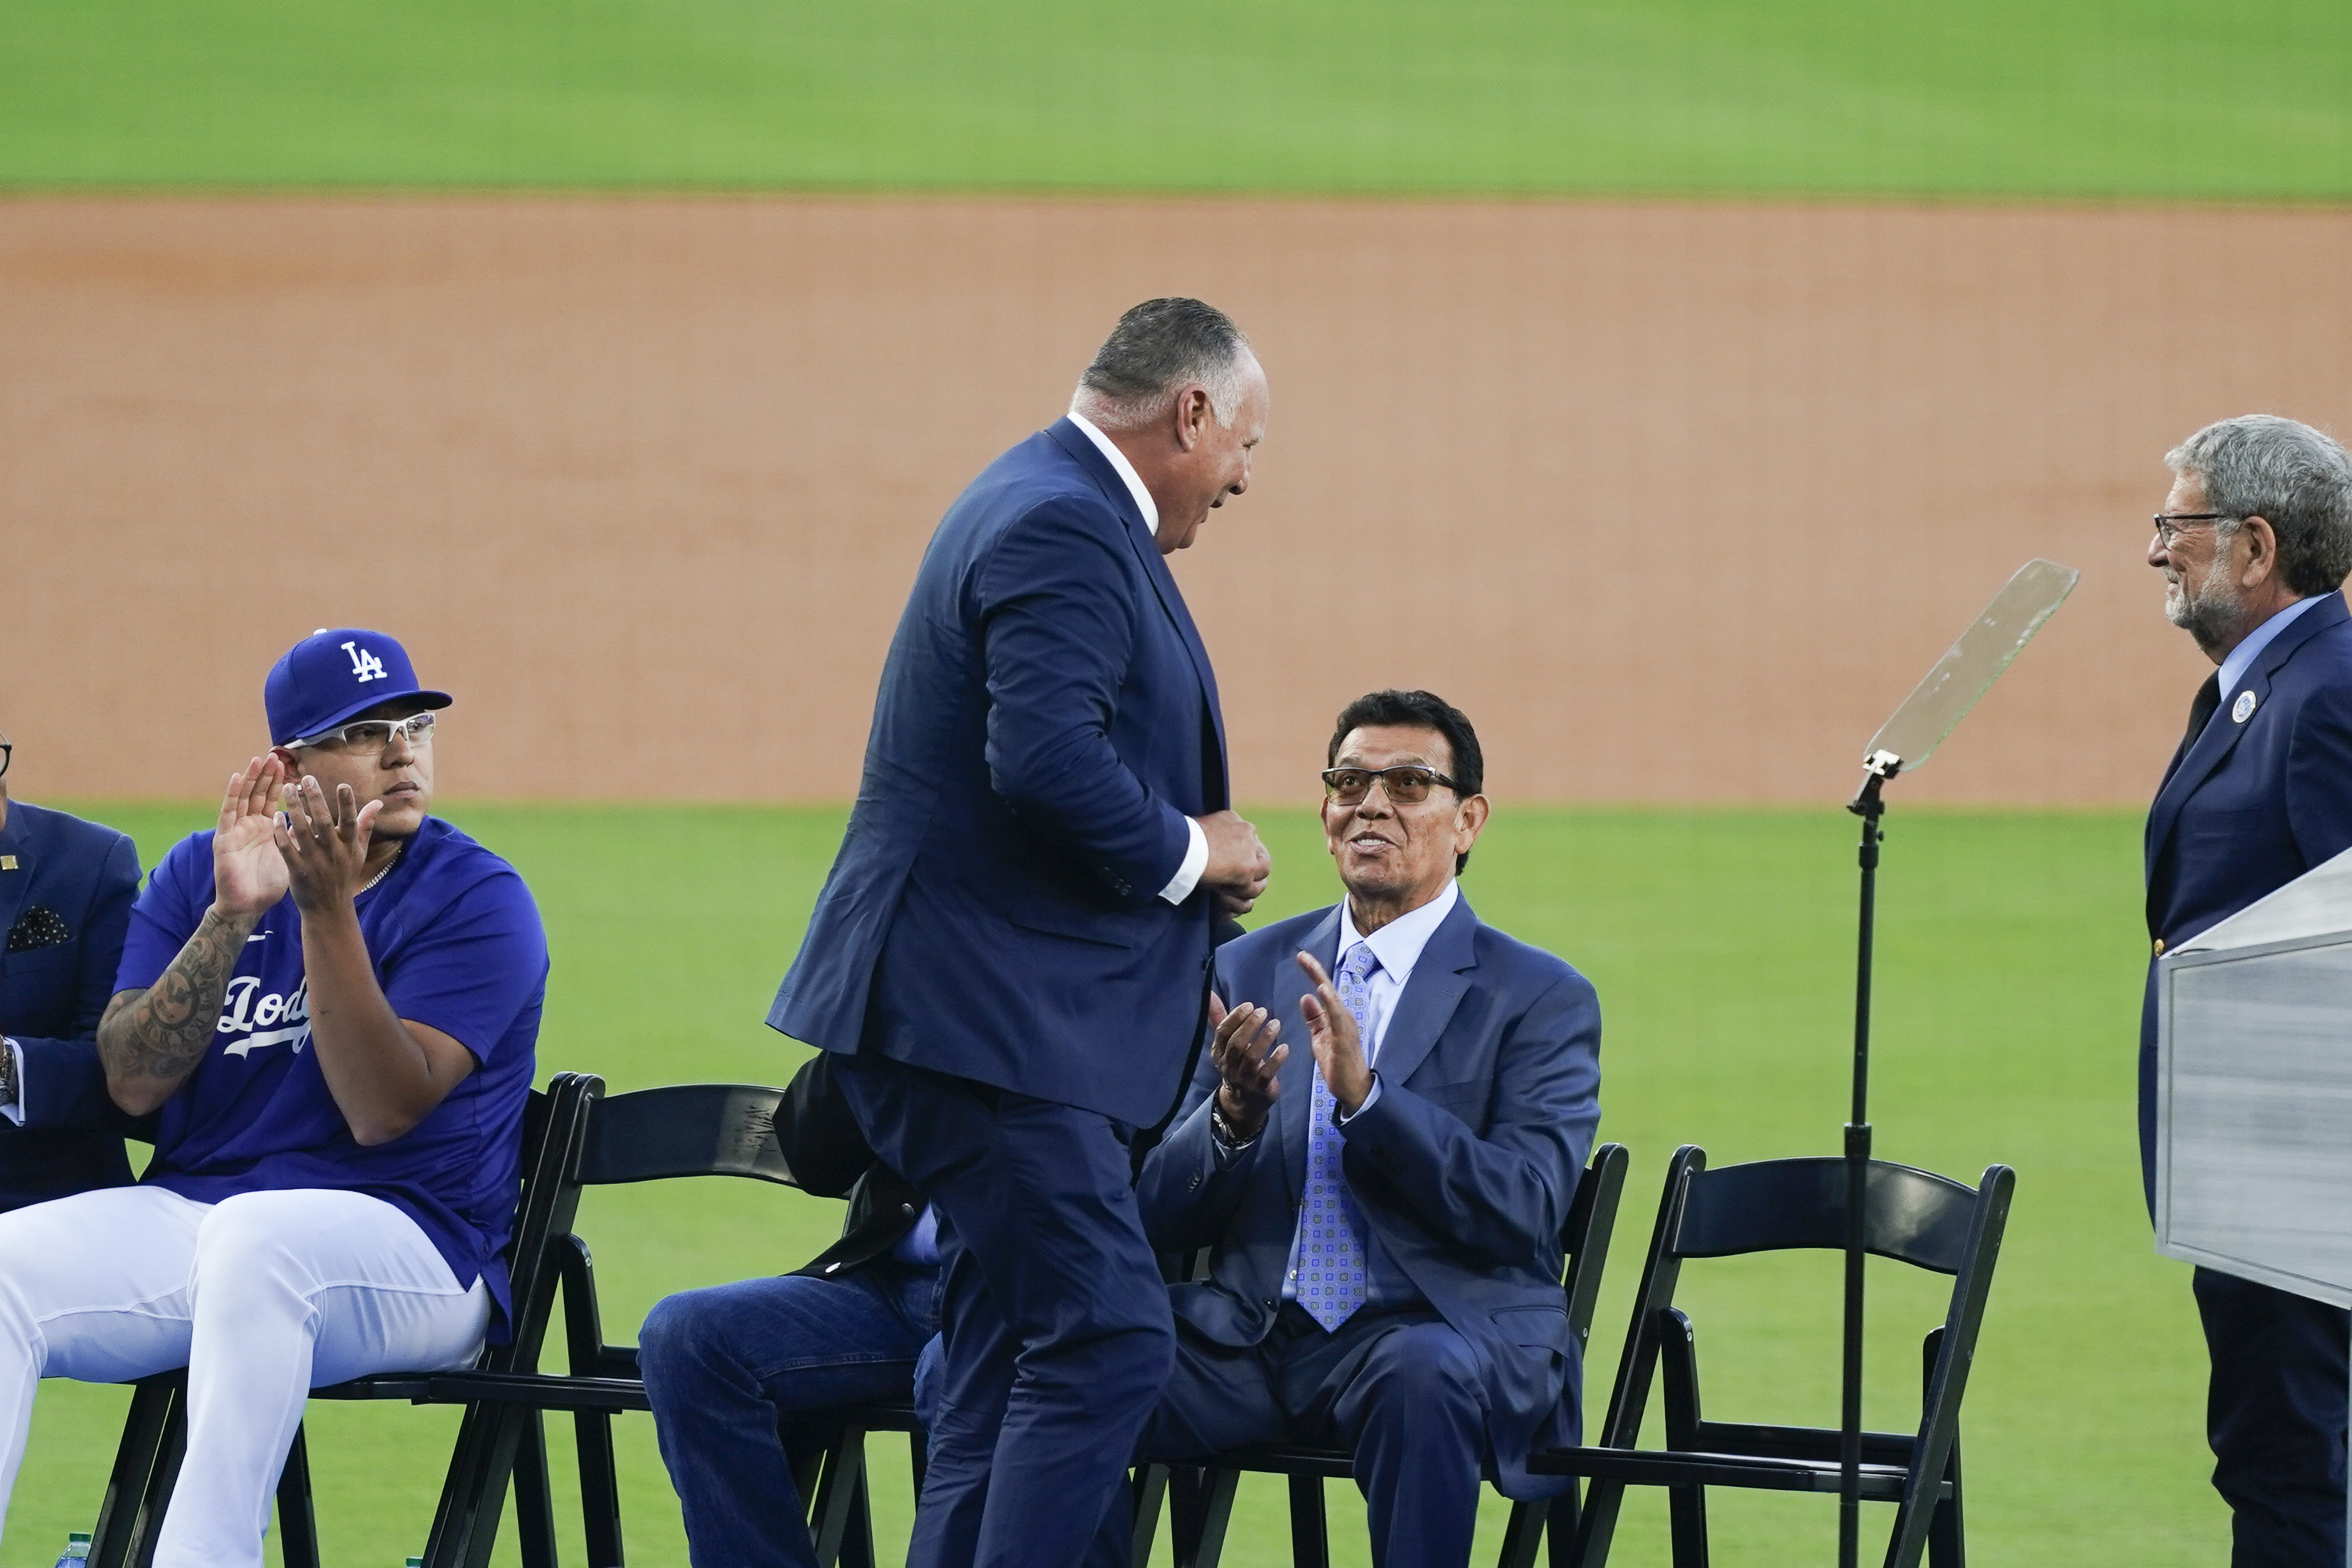 As Dodgers honor Fernando Valenzuela, revisiting Fernandomania - ESPN